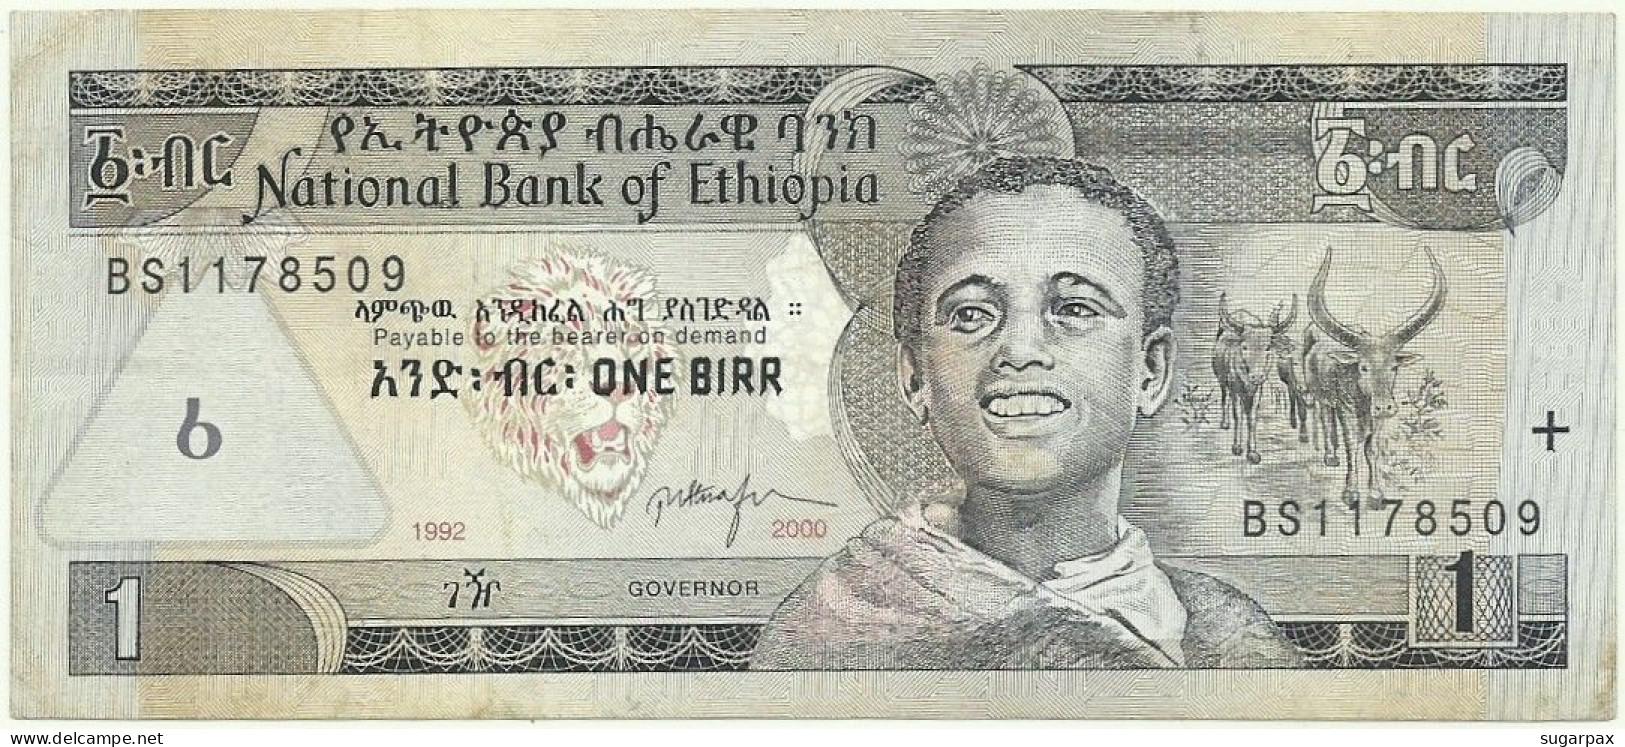 Ethiopia - 1 Birr - 2000 / EE 1992 - Pick 46.b - Unc. - Sign. 6 ( 1998 - ) - Serie BS - Etiopia